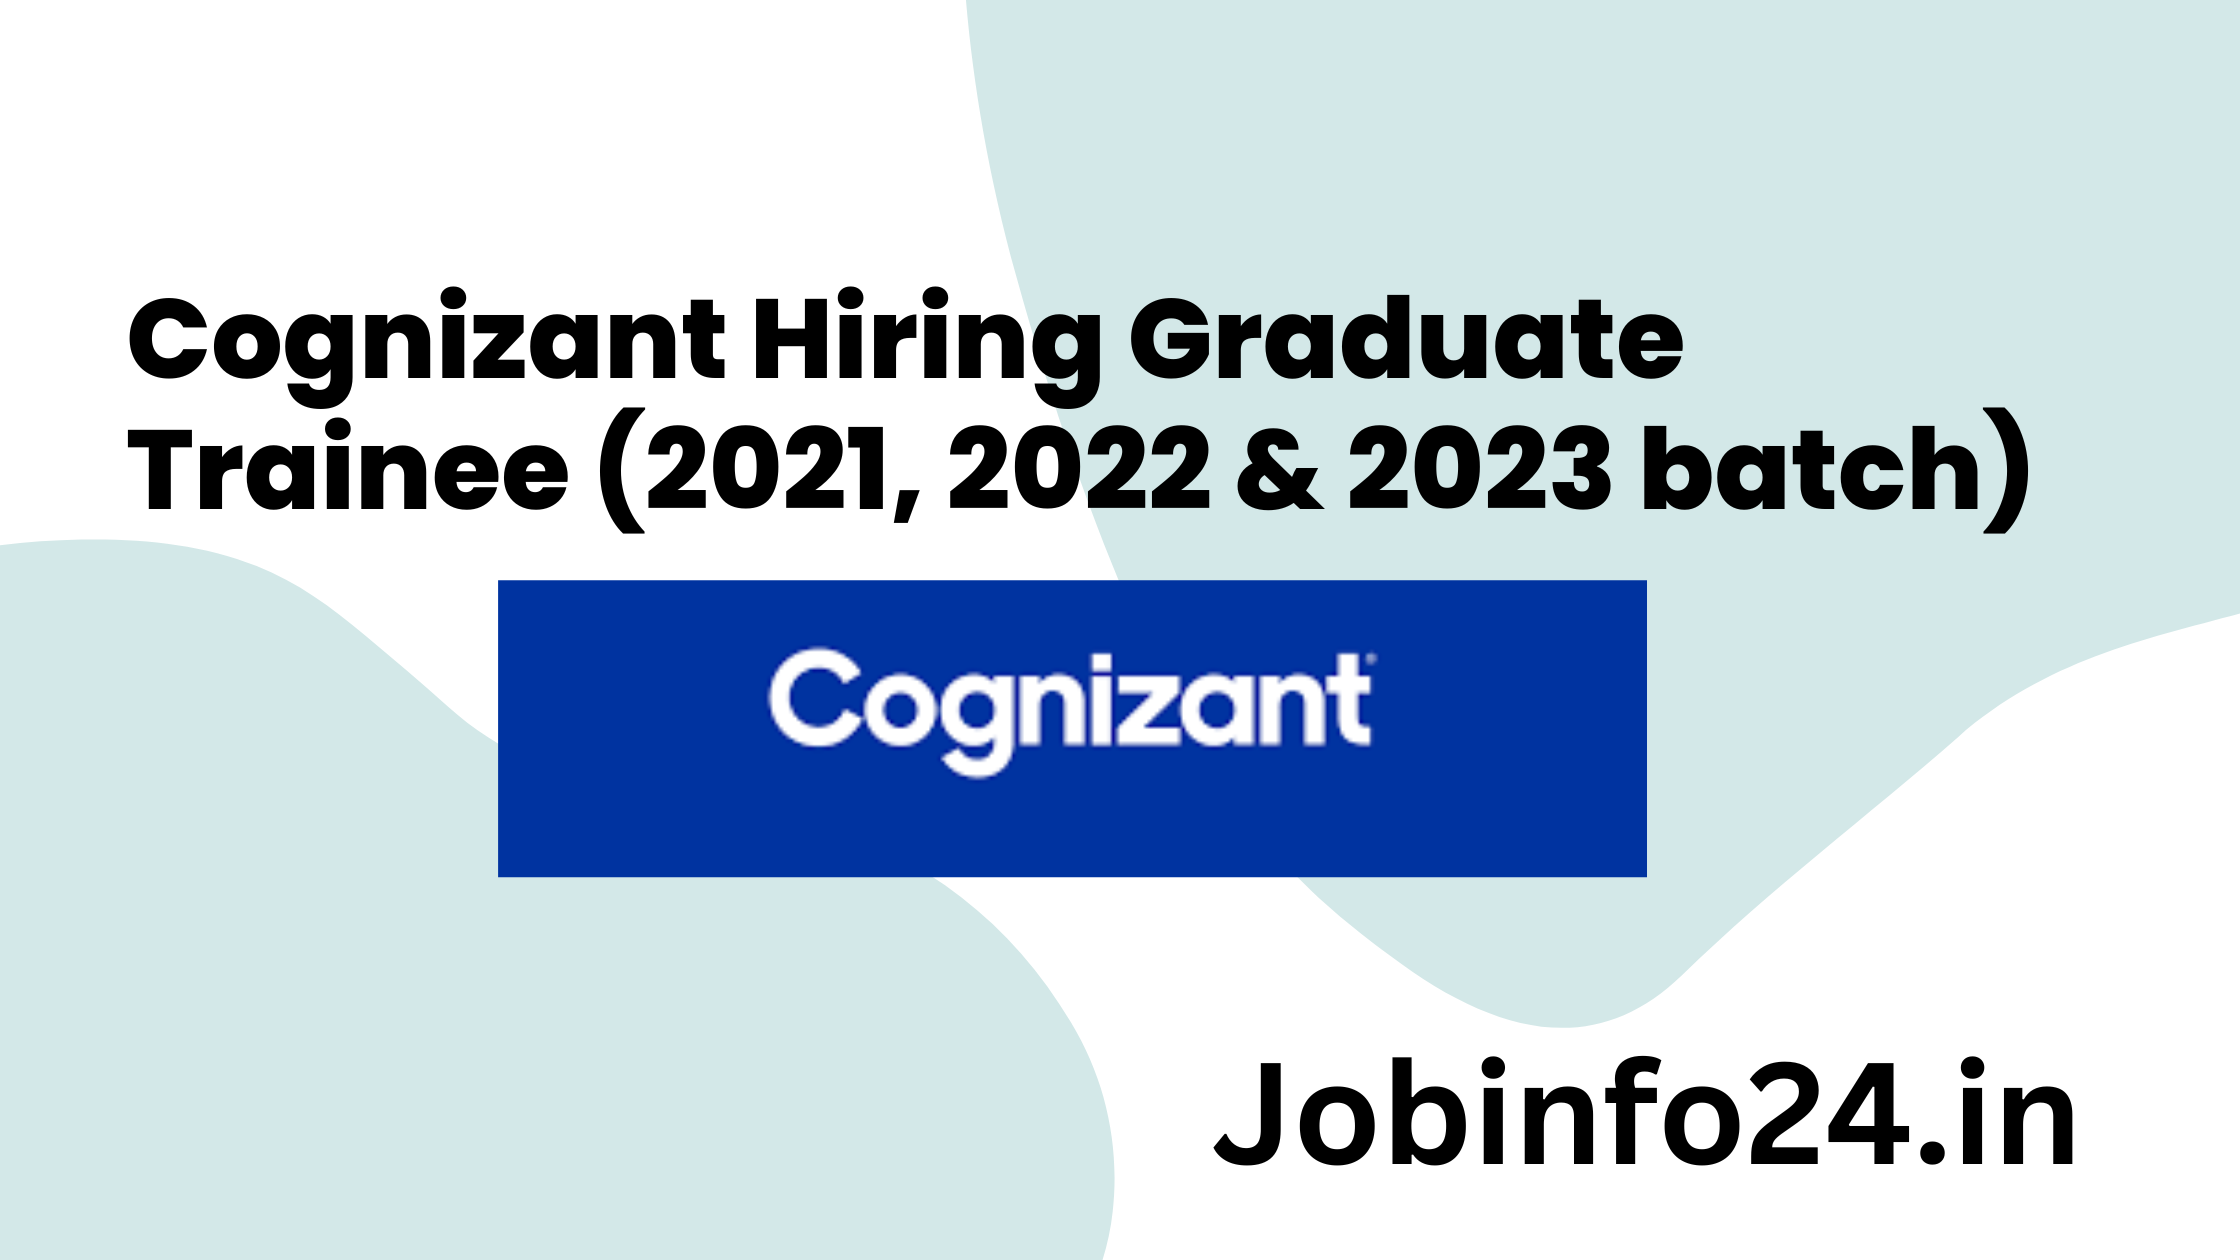 Cognizant Hiring Graduate Trainee (2021, 2022 & 2023 batch)